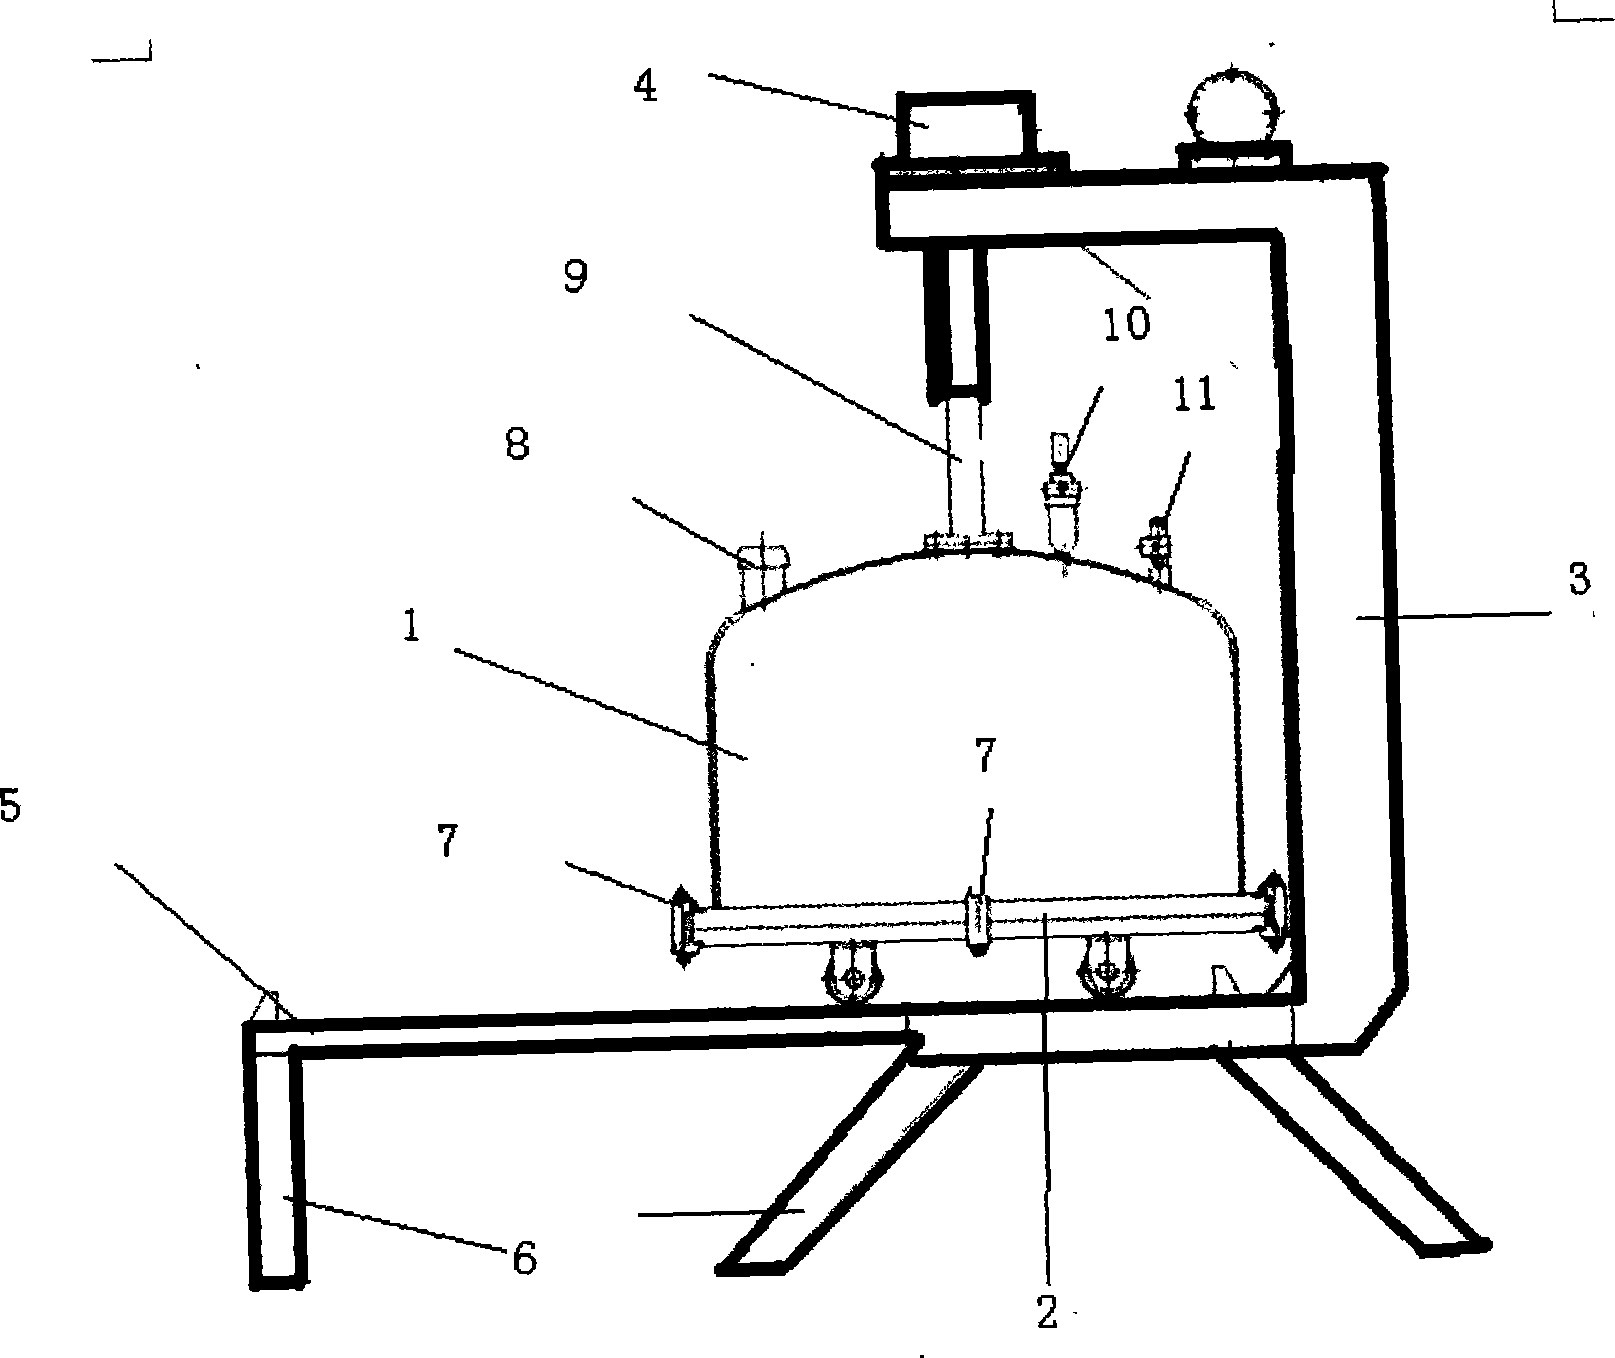 Method for producing high-grade nickel oxide